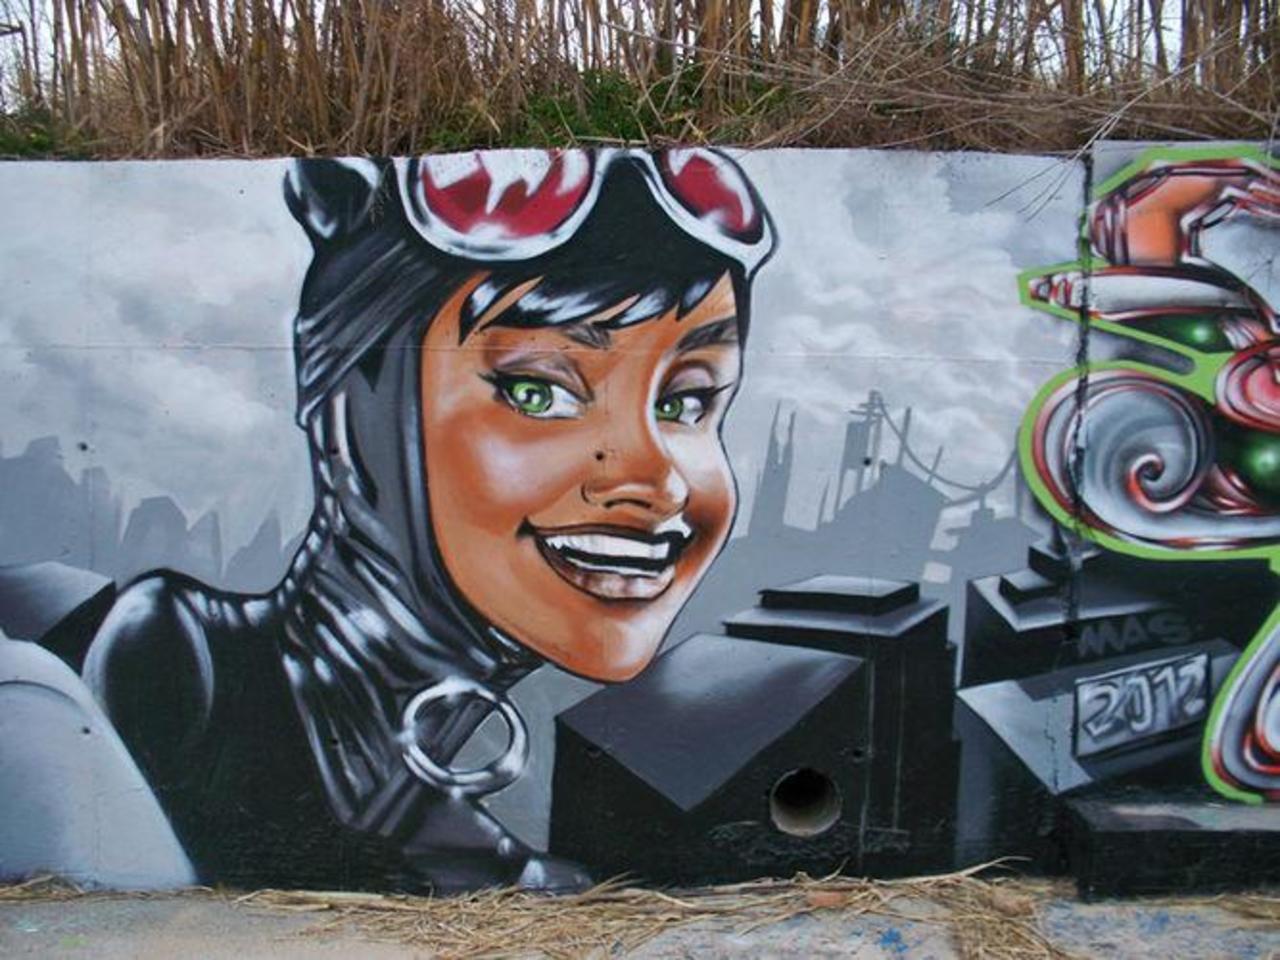 #UBW - A few #StreetArt pieces by MAS SGT from Bordeaux, #France - #Graffiti #Mural #Portrait #Cat #KittyOnCardboard http://t.co/uEyvix3cbI